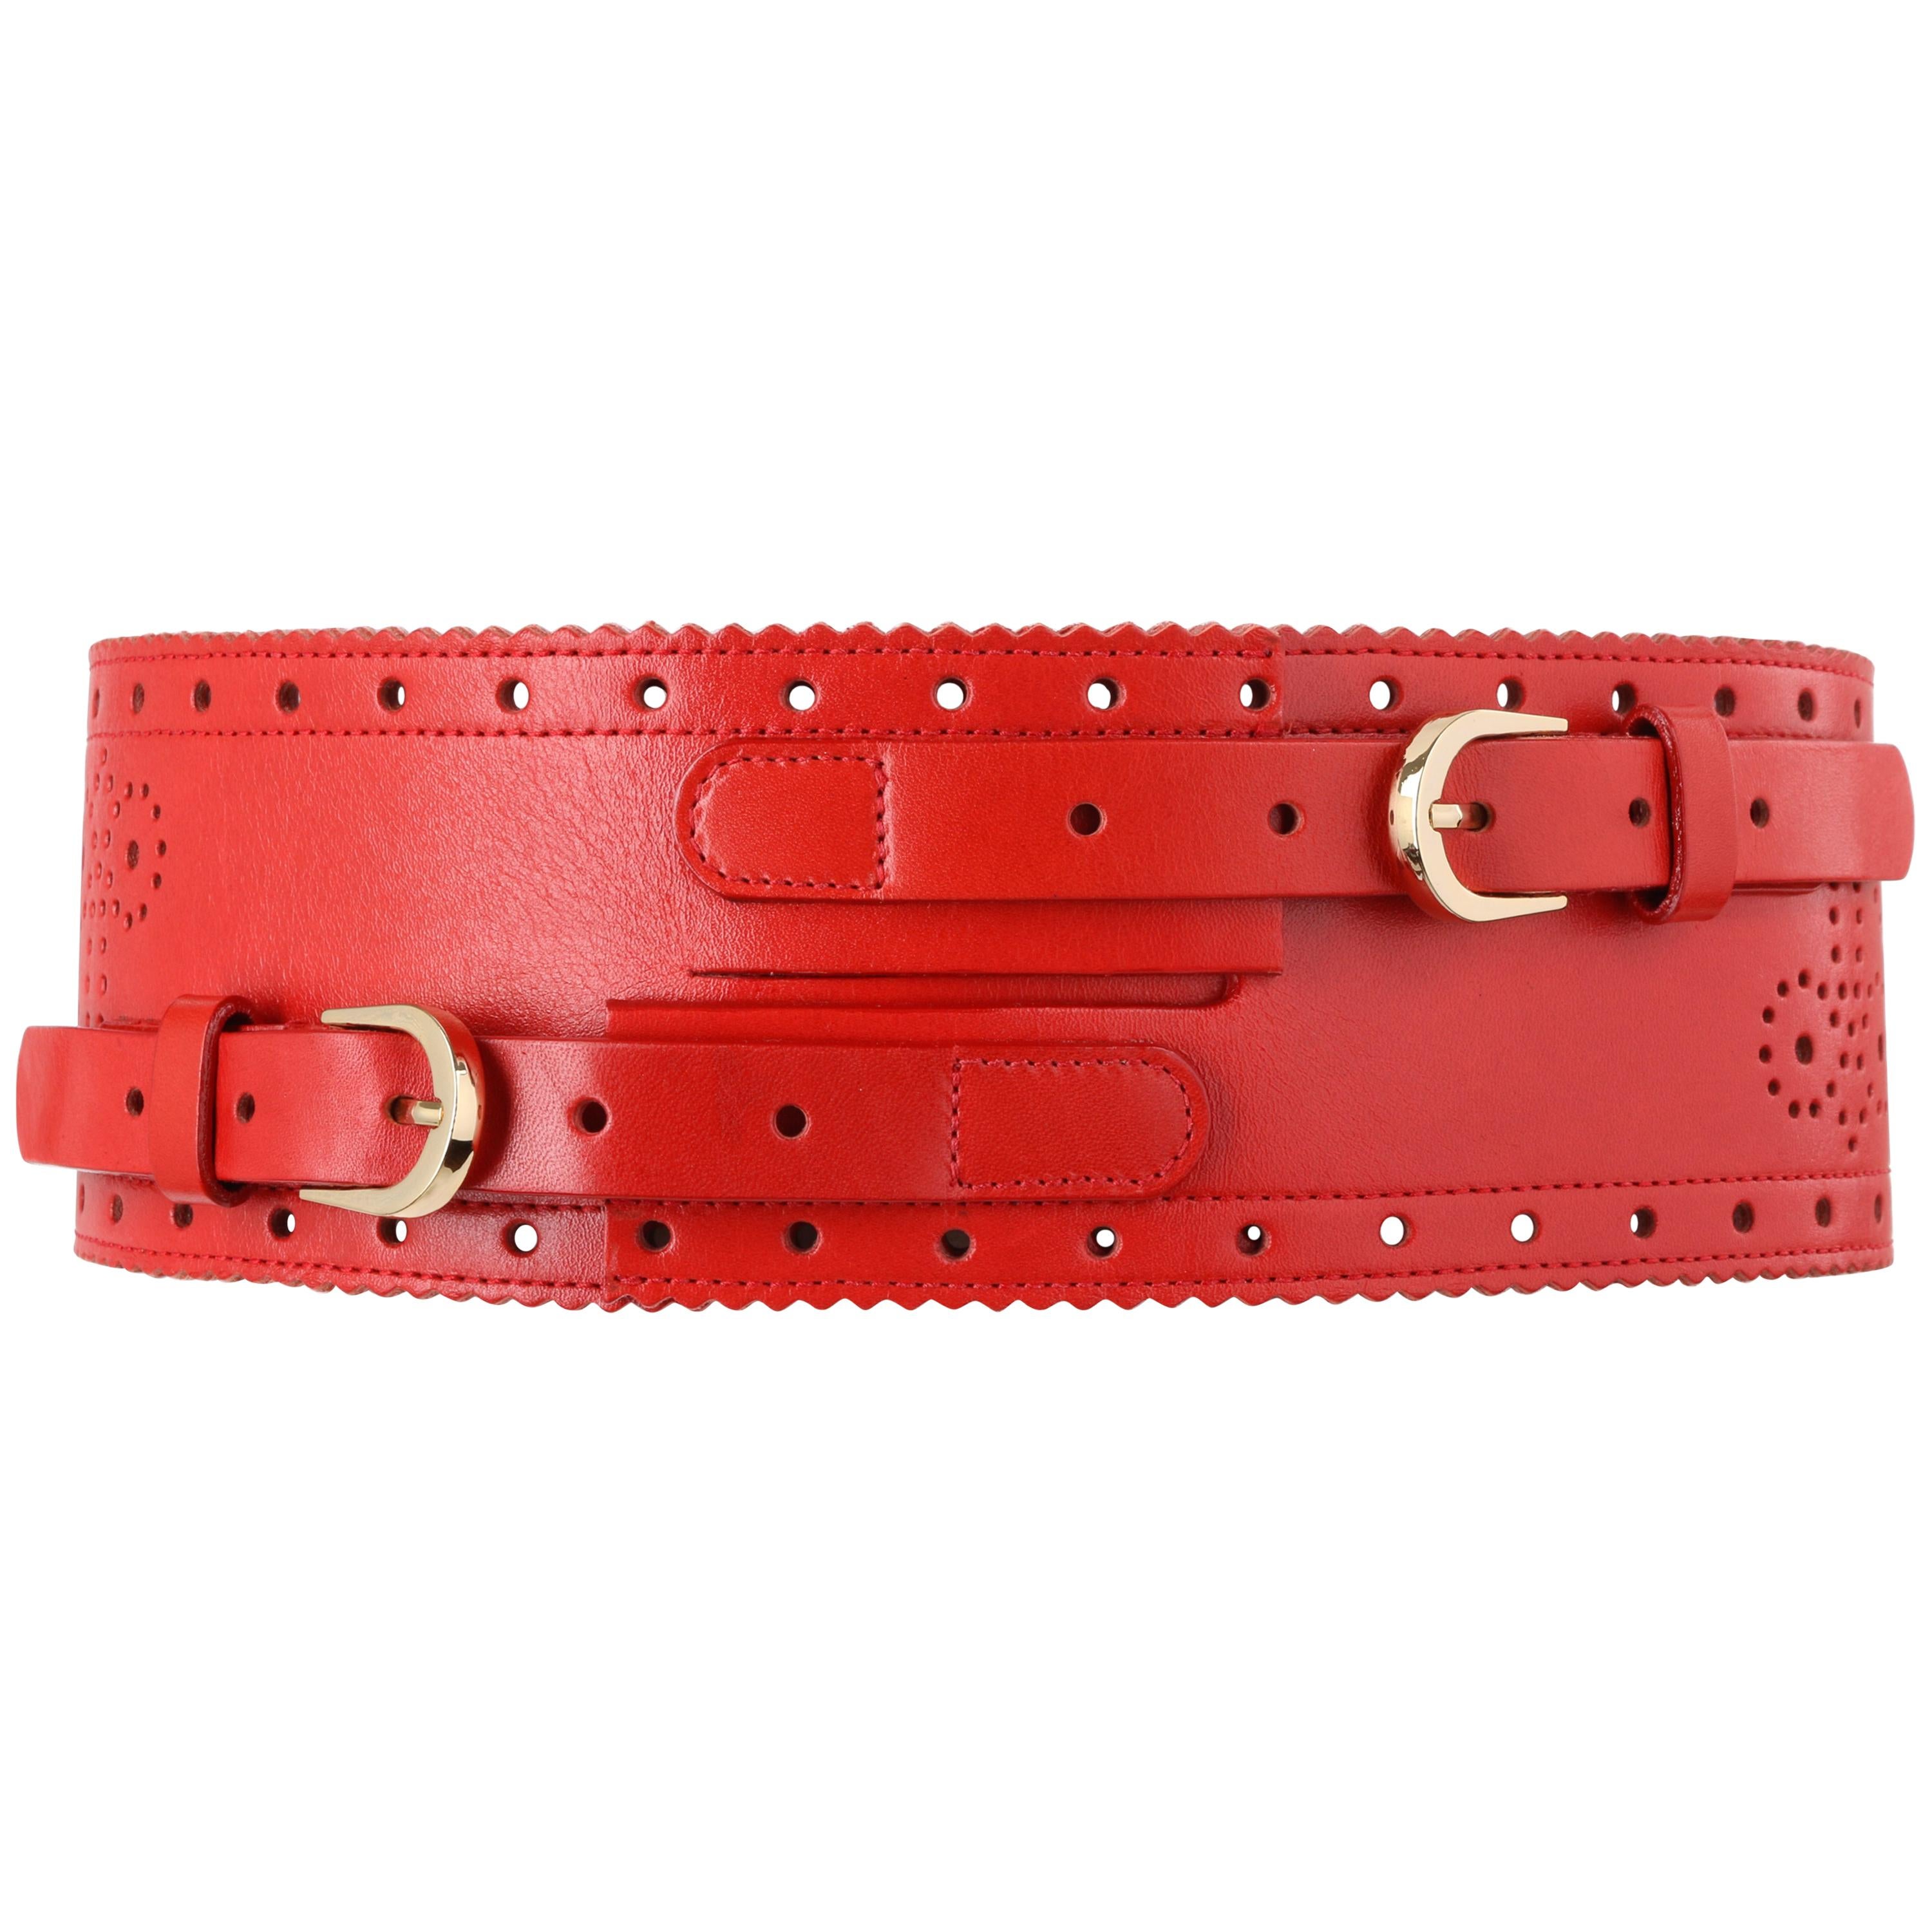 OSCAR DE LA RENTA S/S 2011 Red Perforated Leather Dual Buckle Waist Belt